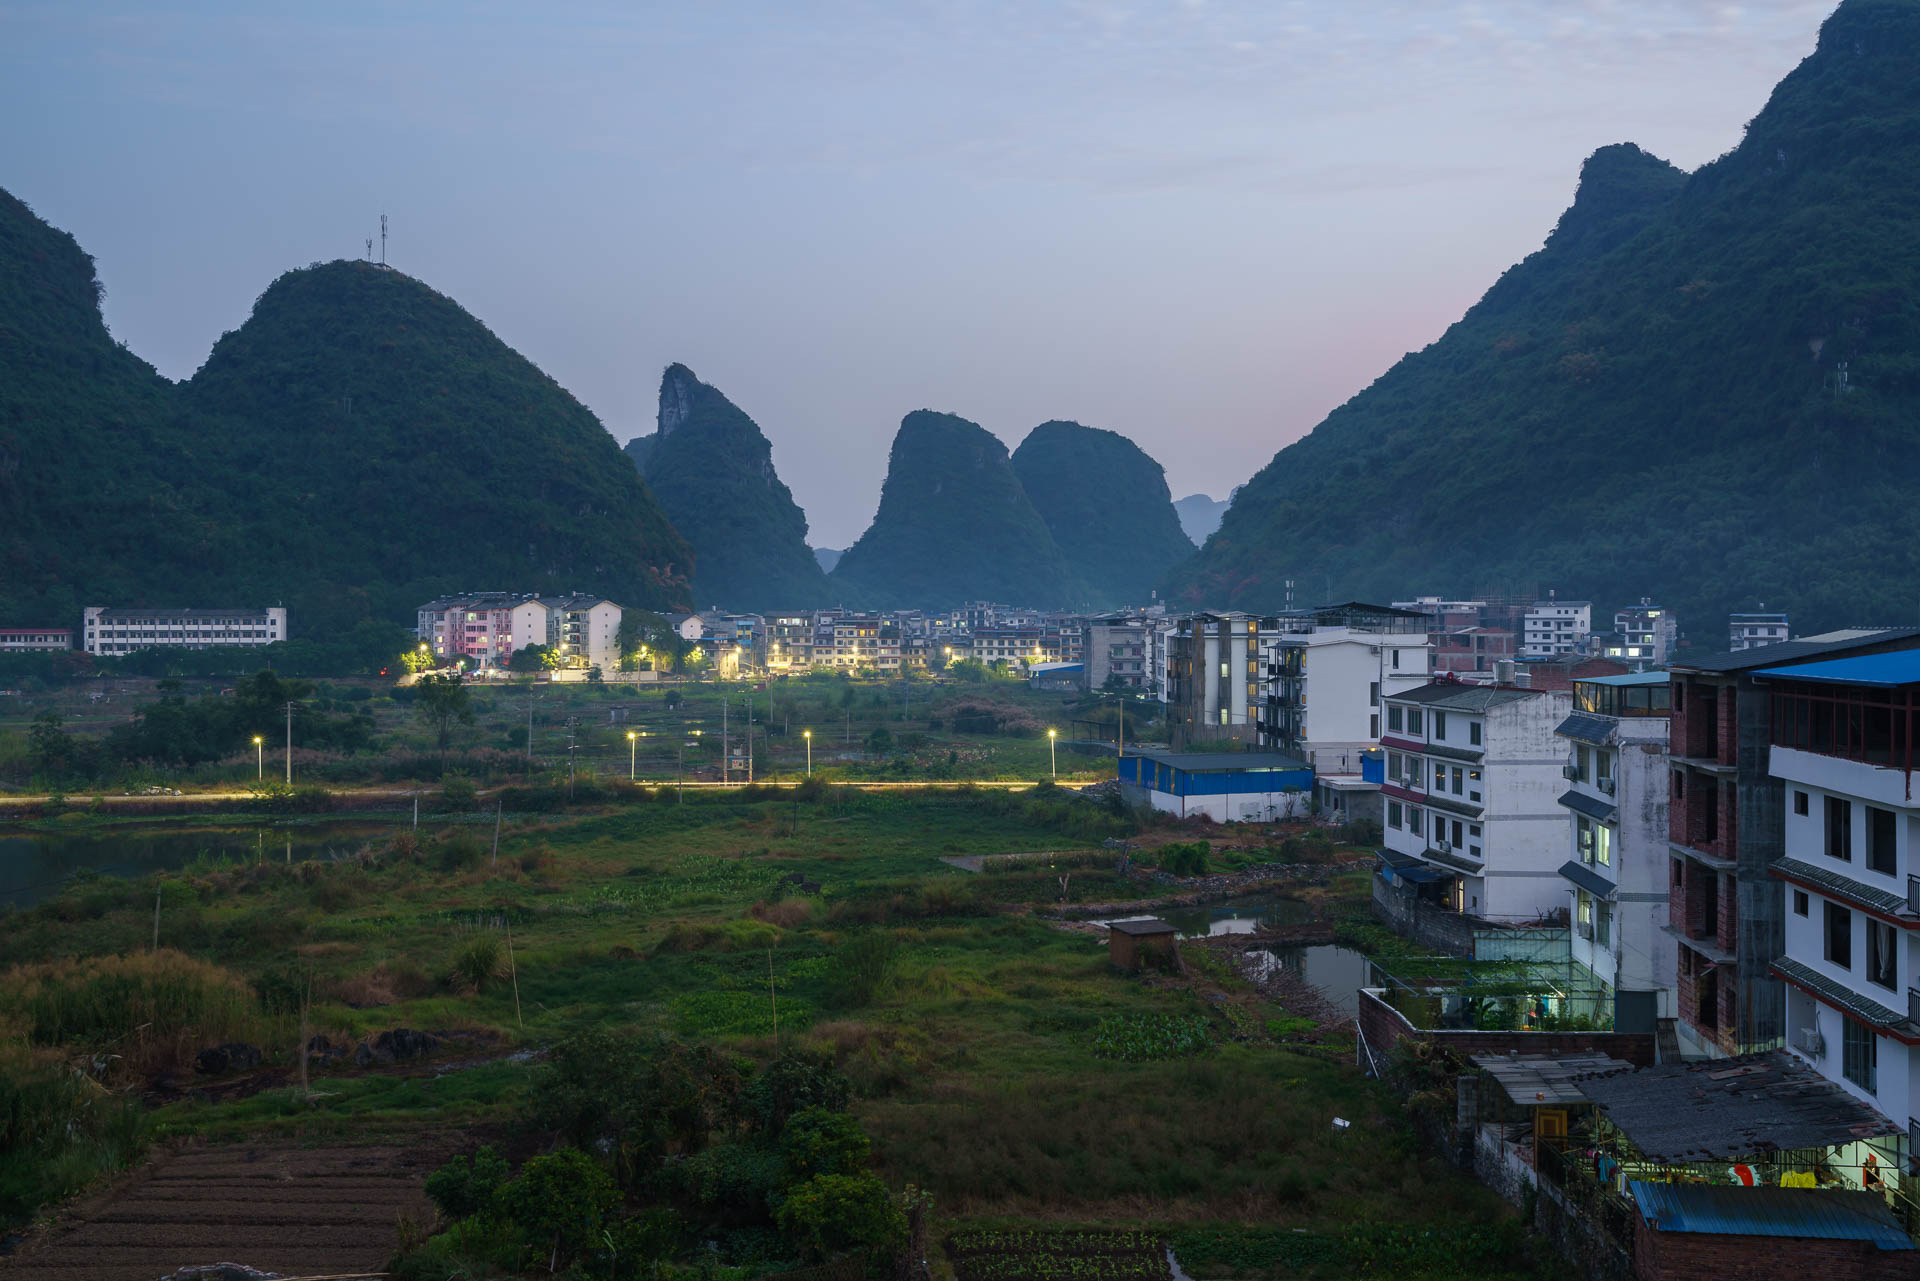 yang shuo farms and city